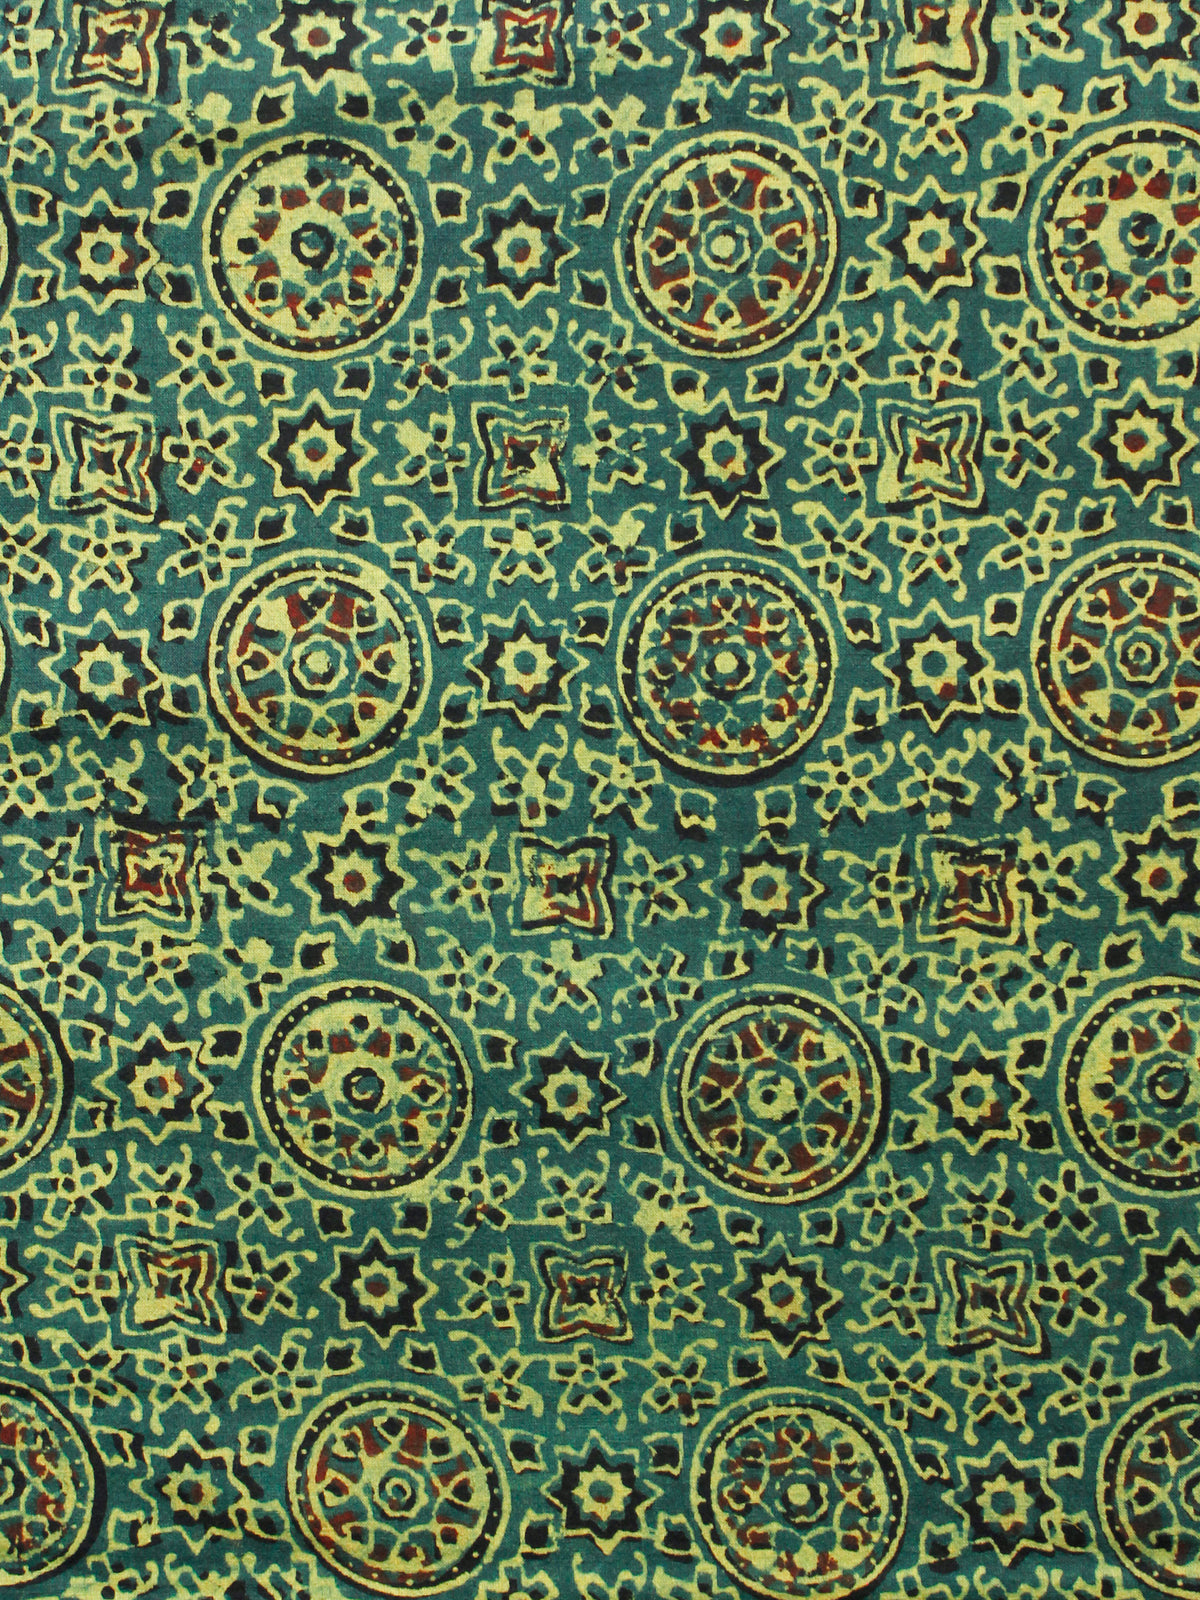 Green Yellow Black Rust Ajrakh Hand Block Printed Cotton Fabric Per Meter - F003F1682